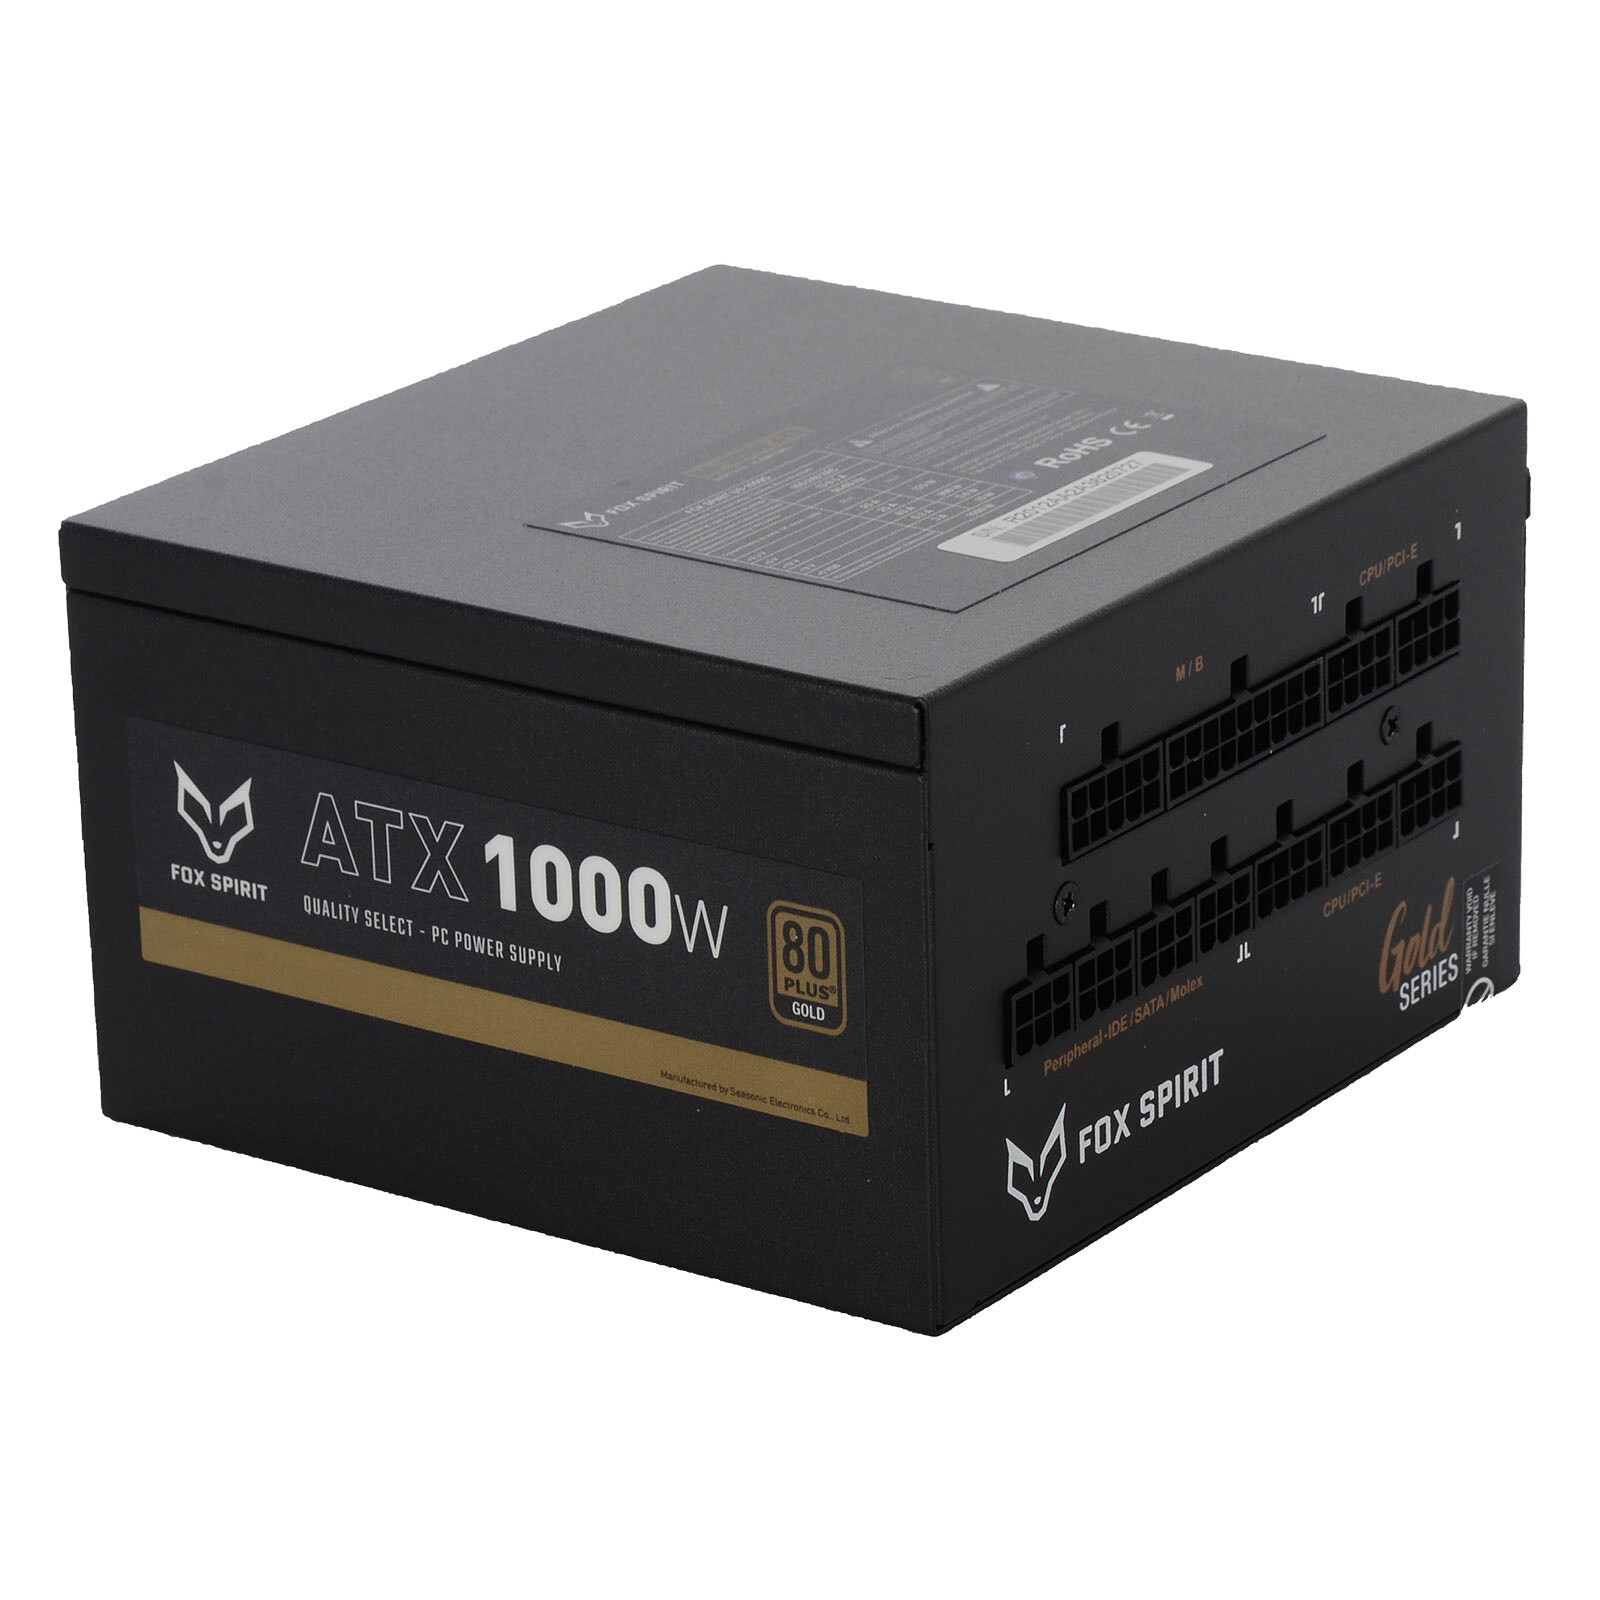 ASUS ROG STRIX 1000W Gold Aura Edition - Alimentation PC - LDLC